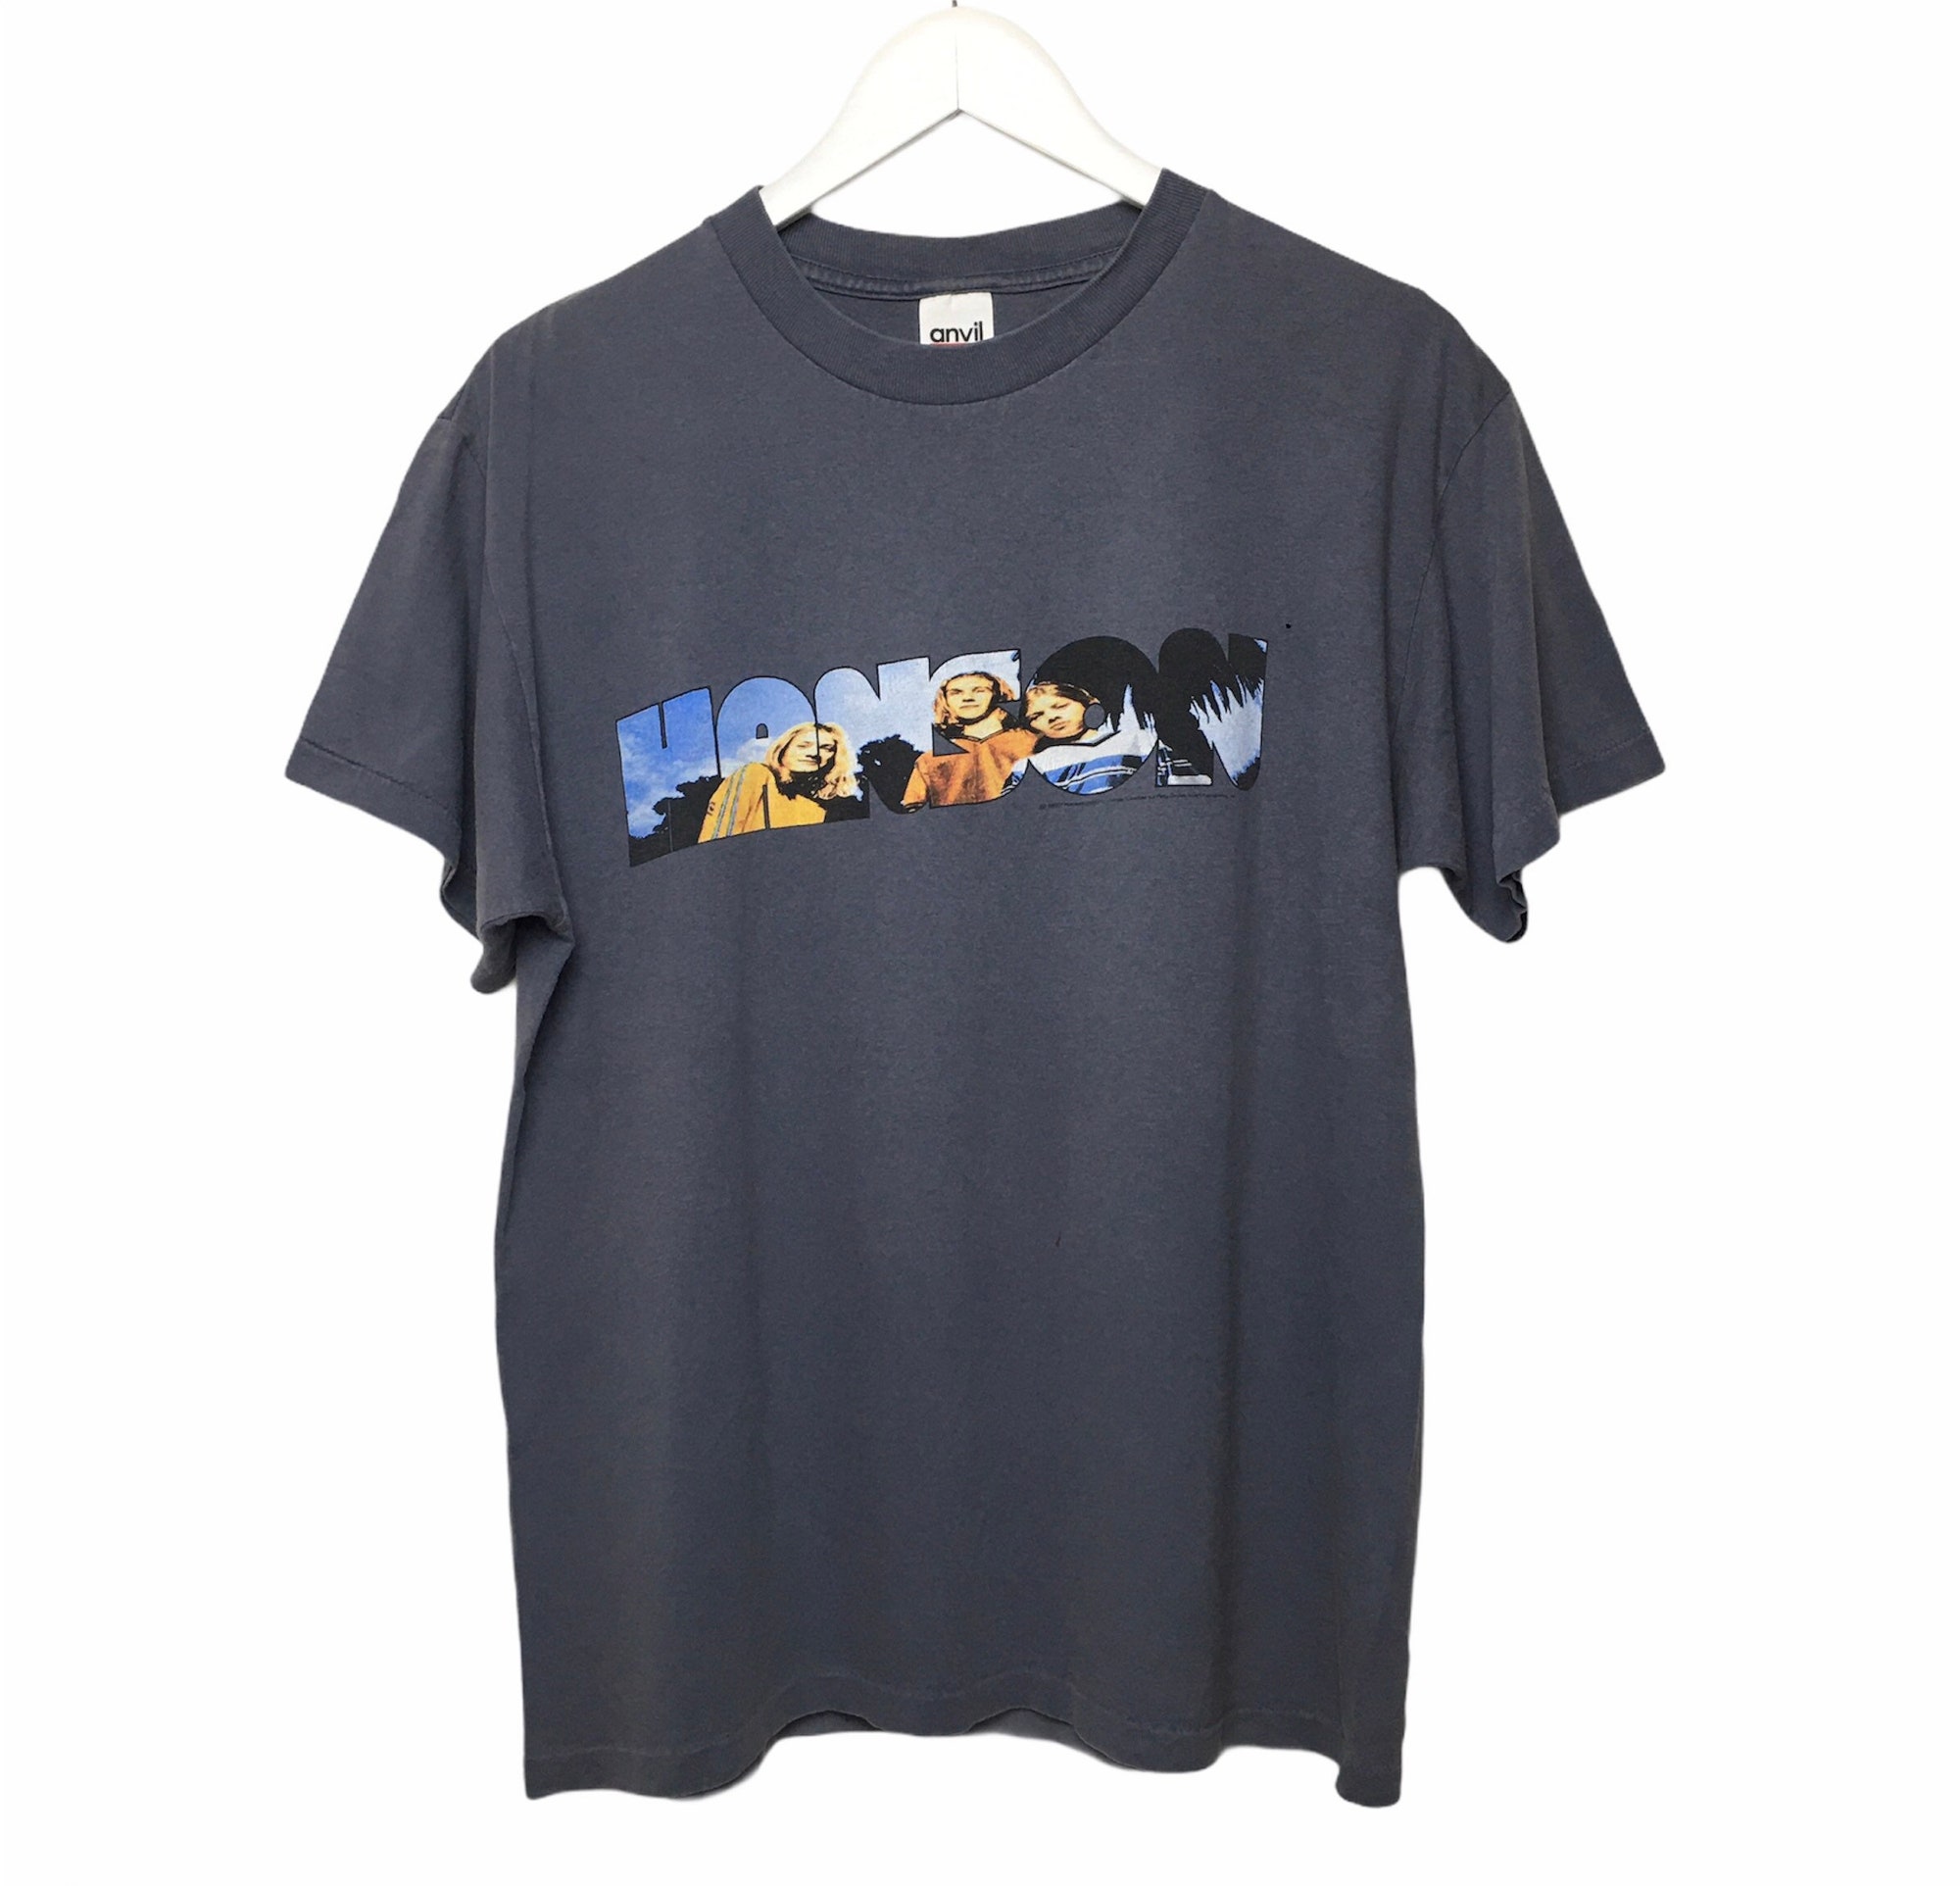 Vintage 90s Hanson Band T Shirt